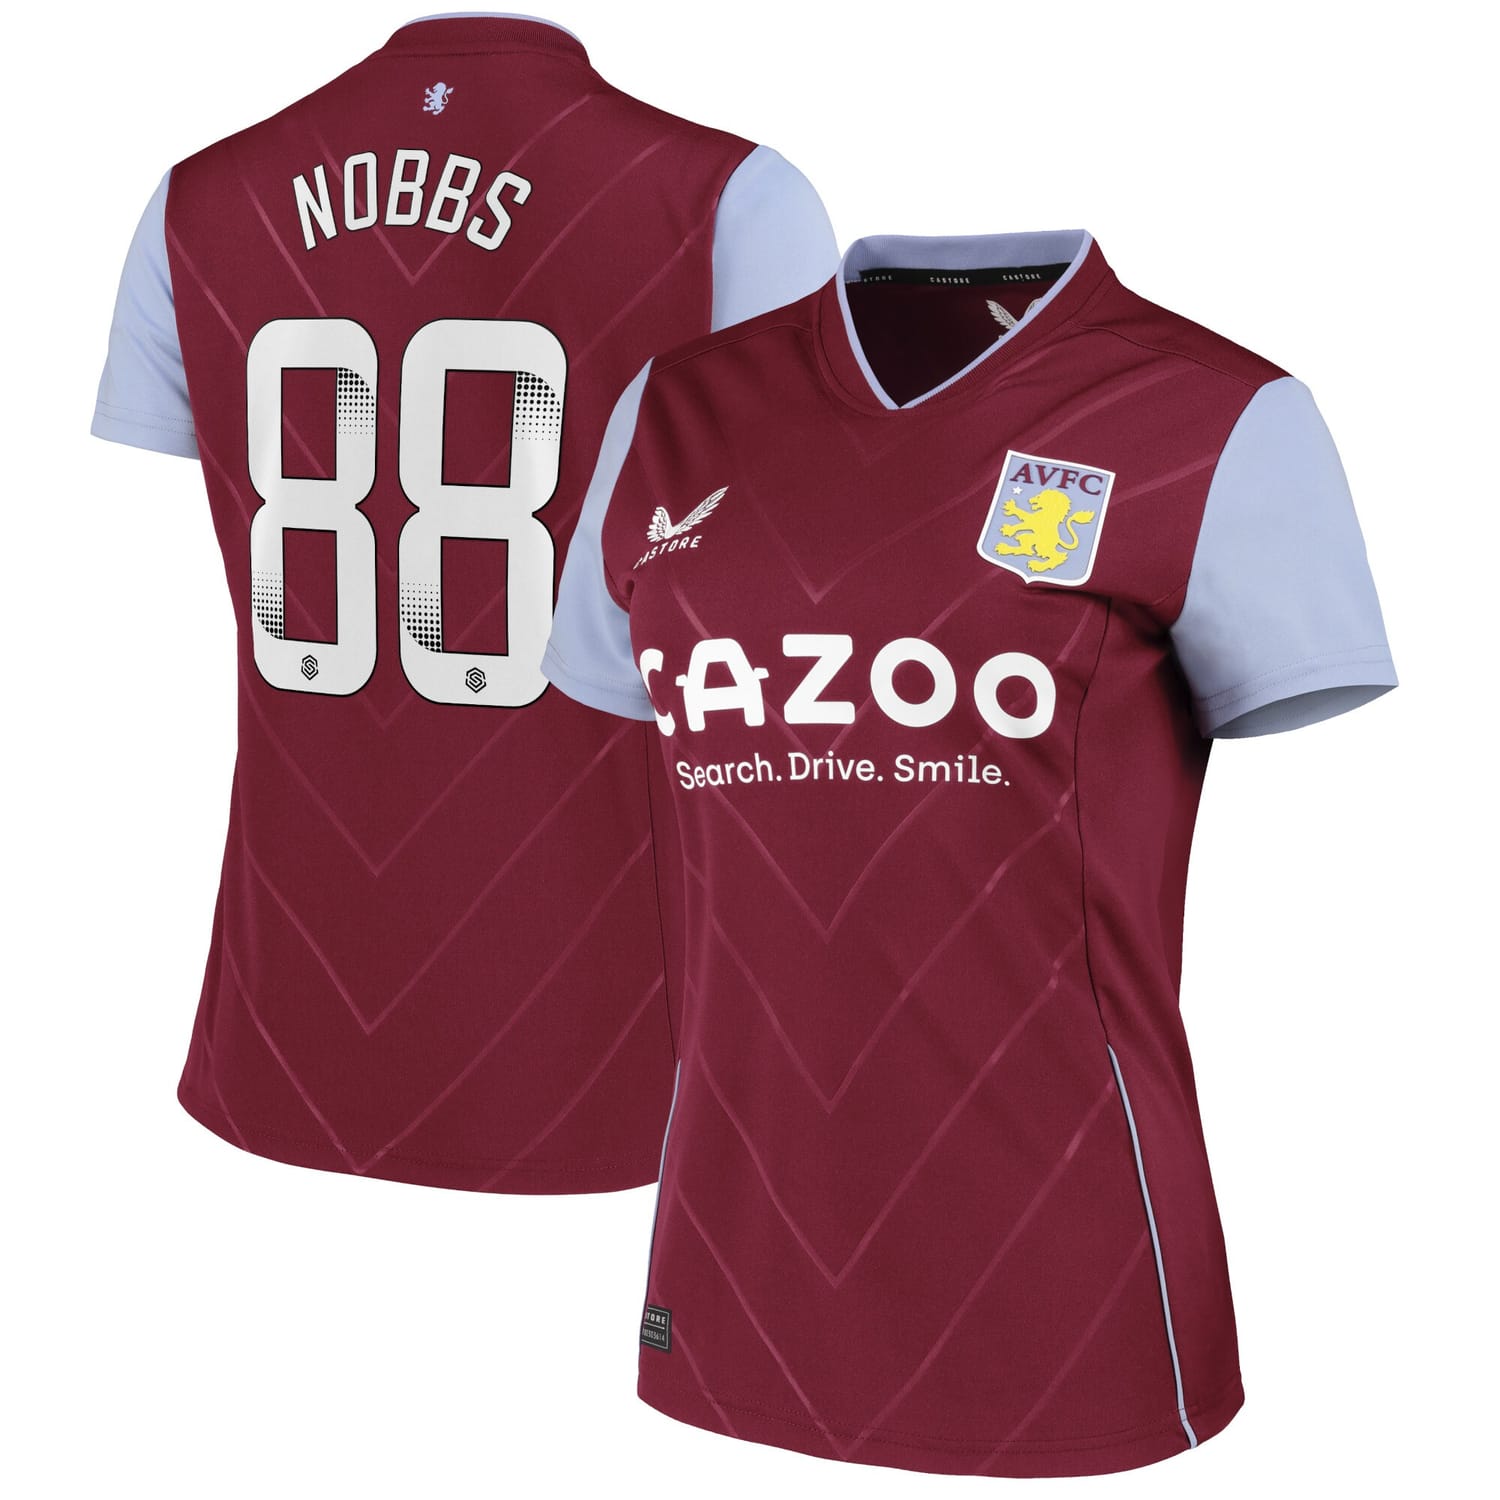 Premier League Aston Villa Home WSL Jersey Shirt 2022-23 player Jordan Nobbs 88 printing for Women